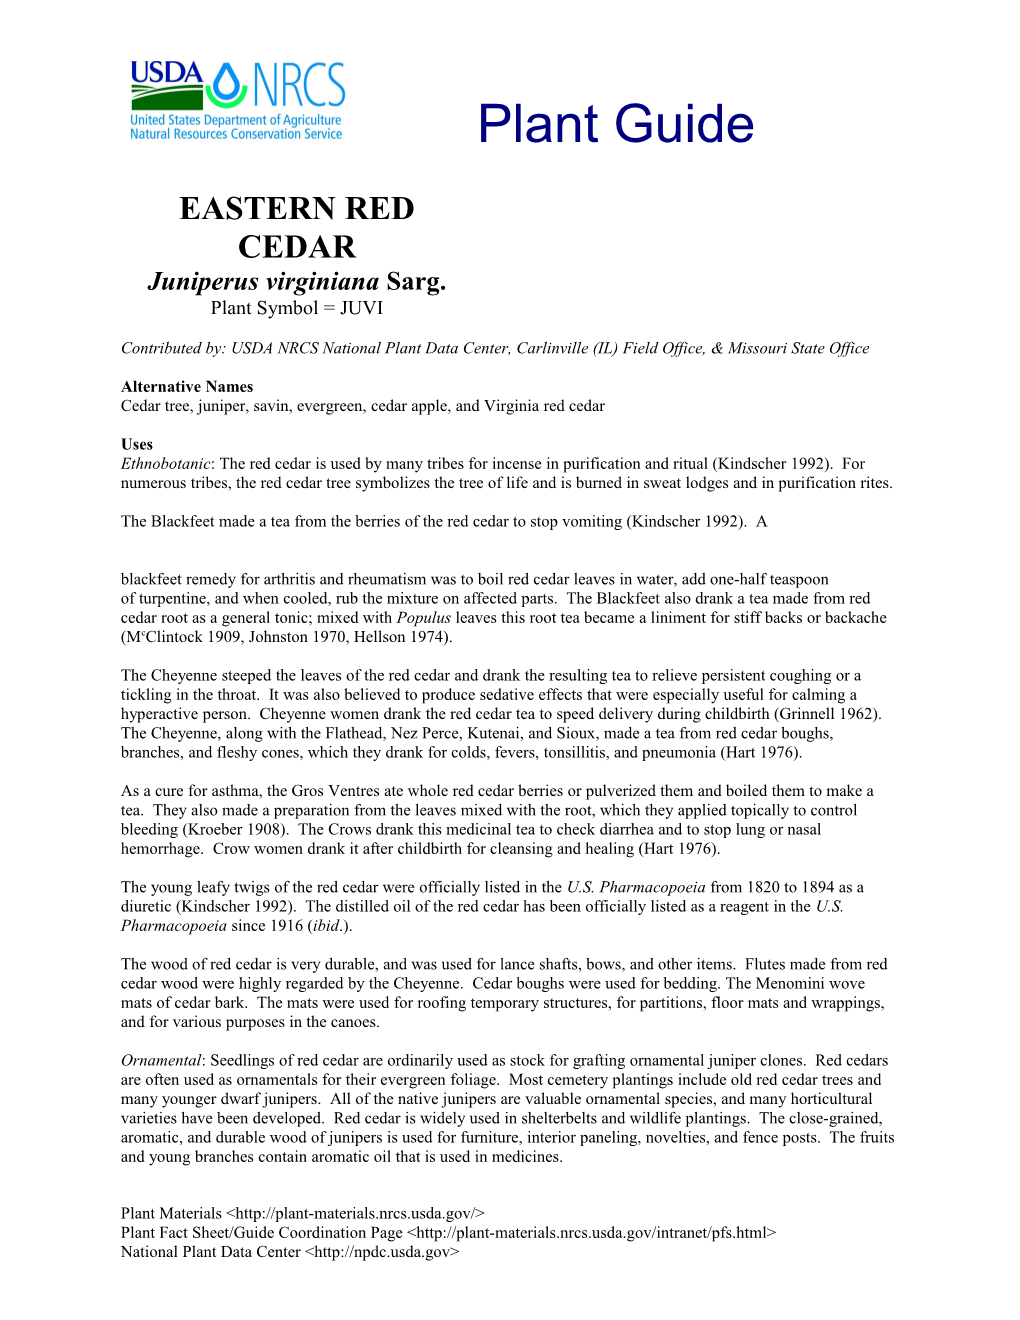 Eastern Red Cedar